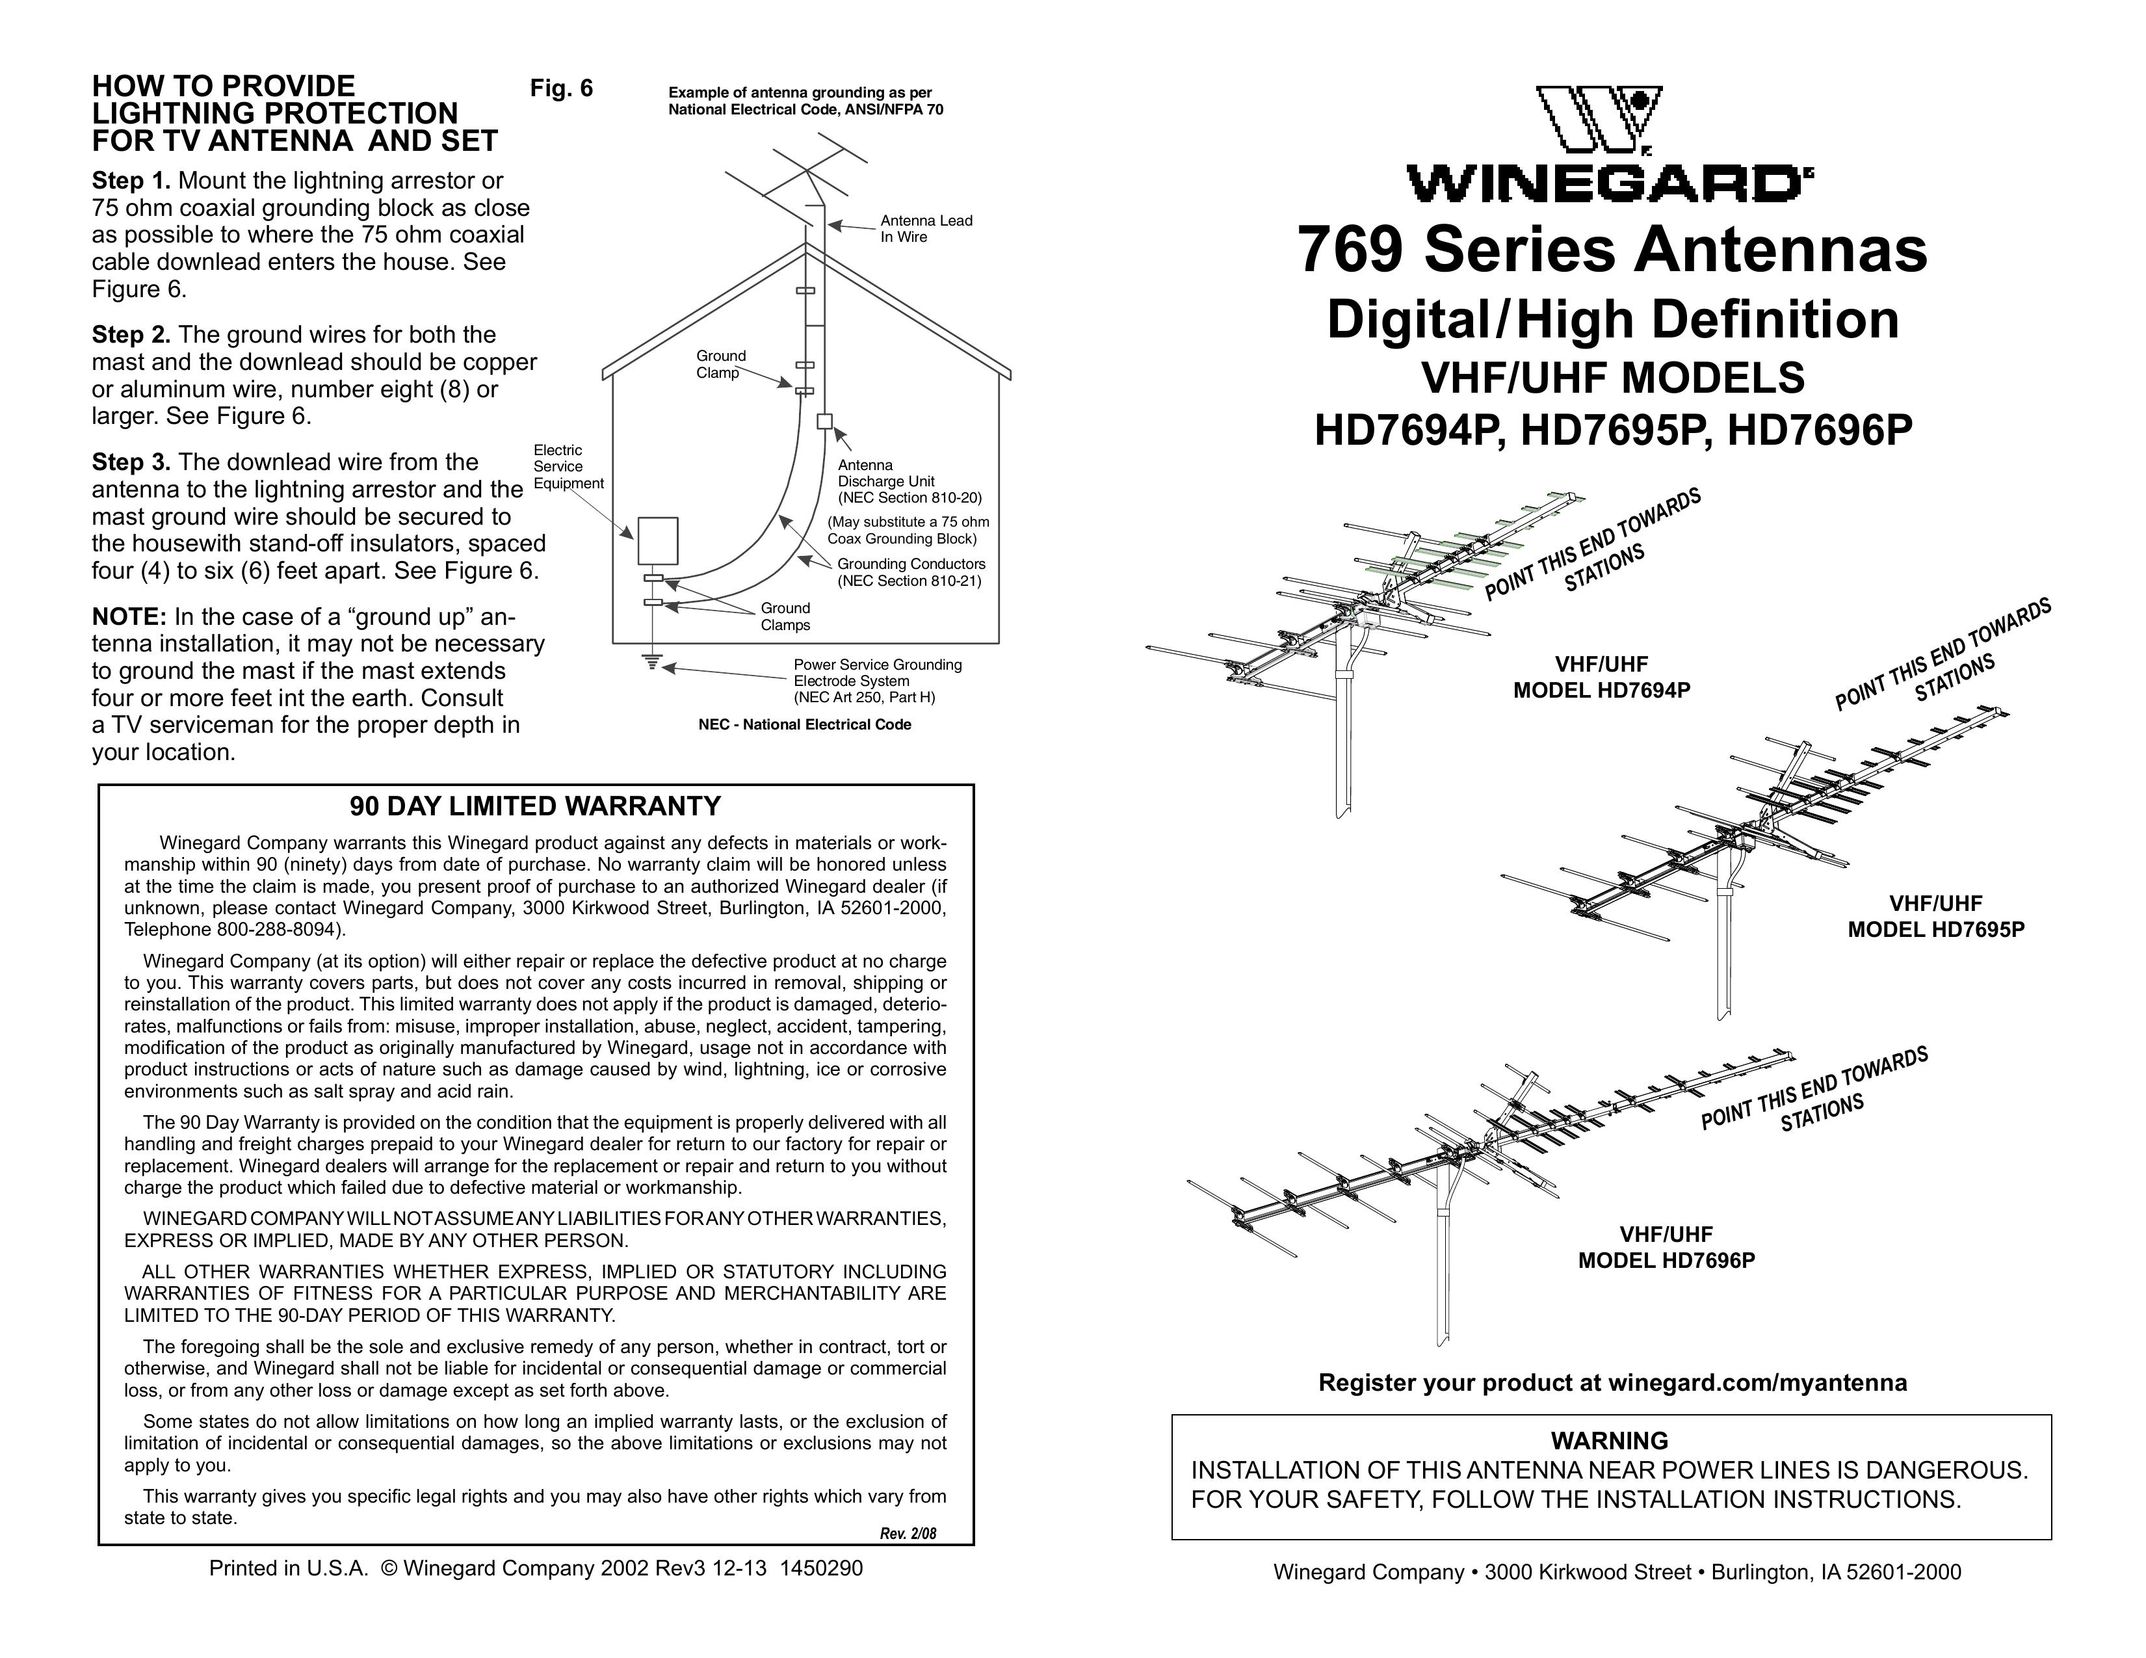 Winegard HD7696P Surge Protector User Manual